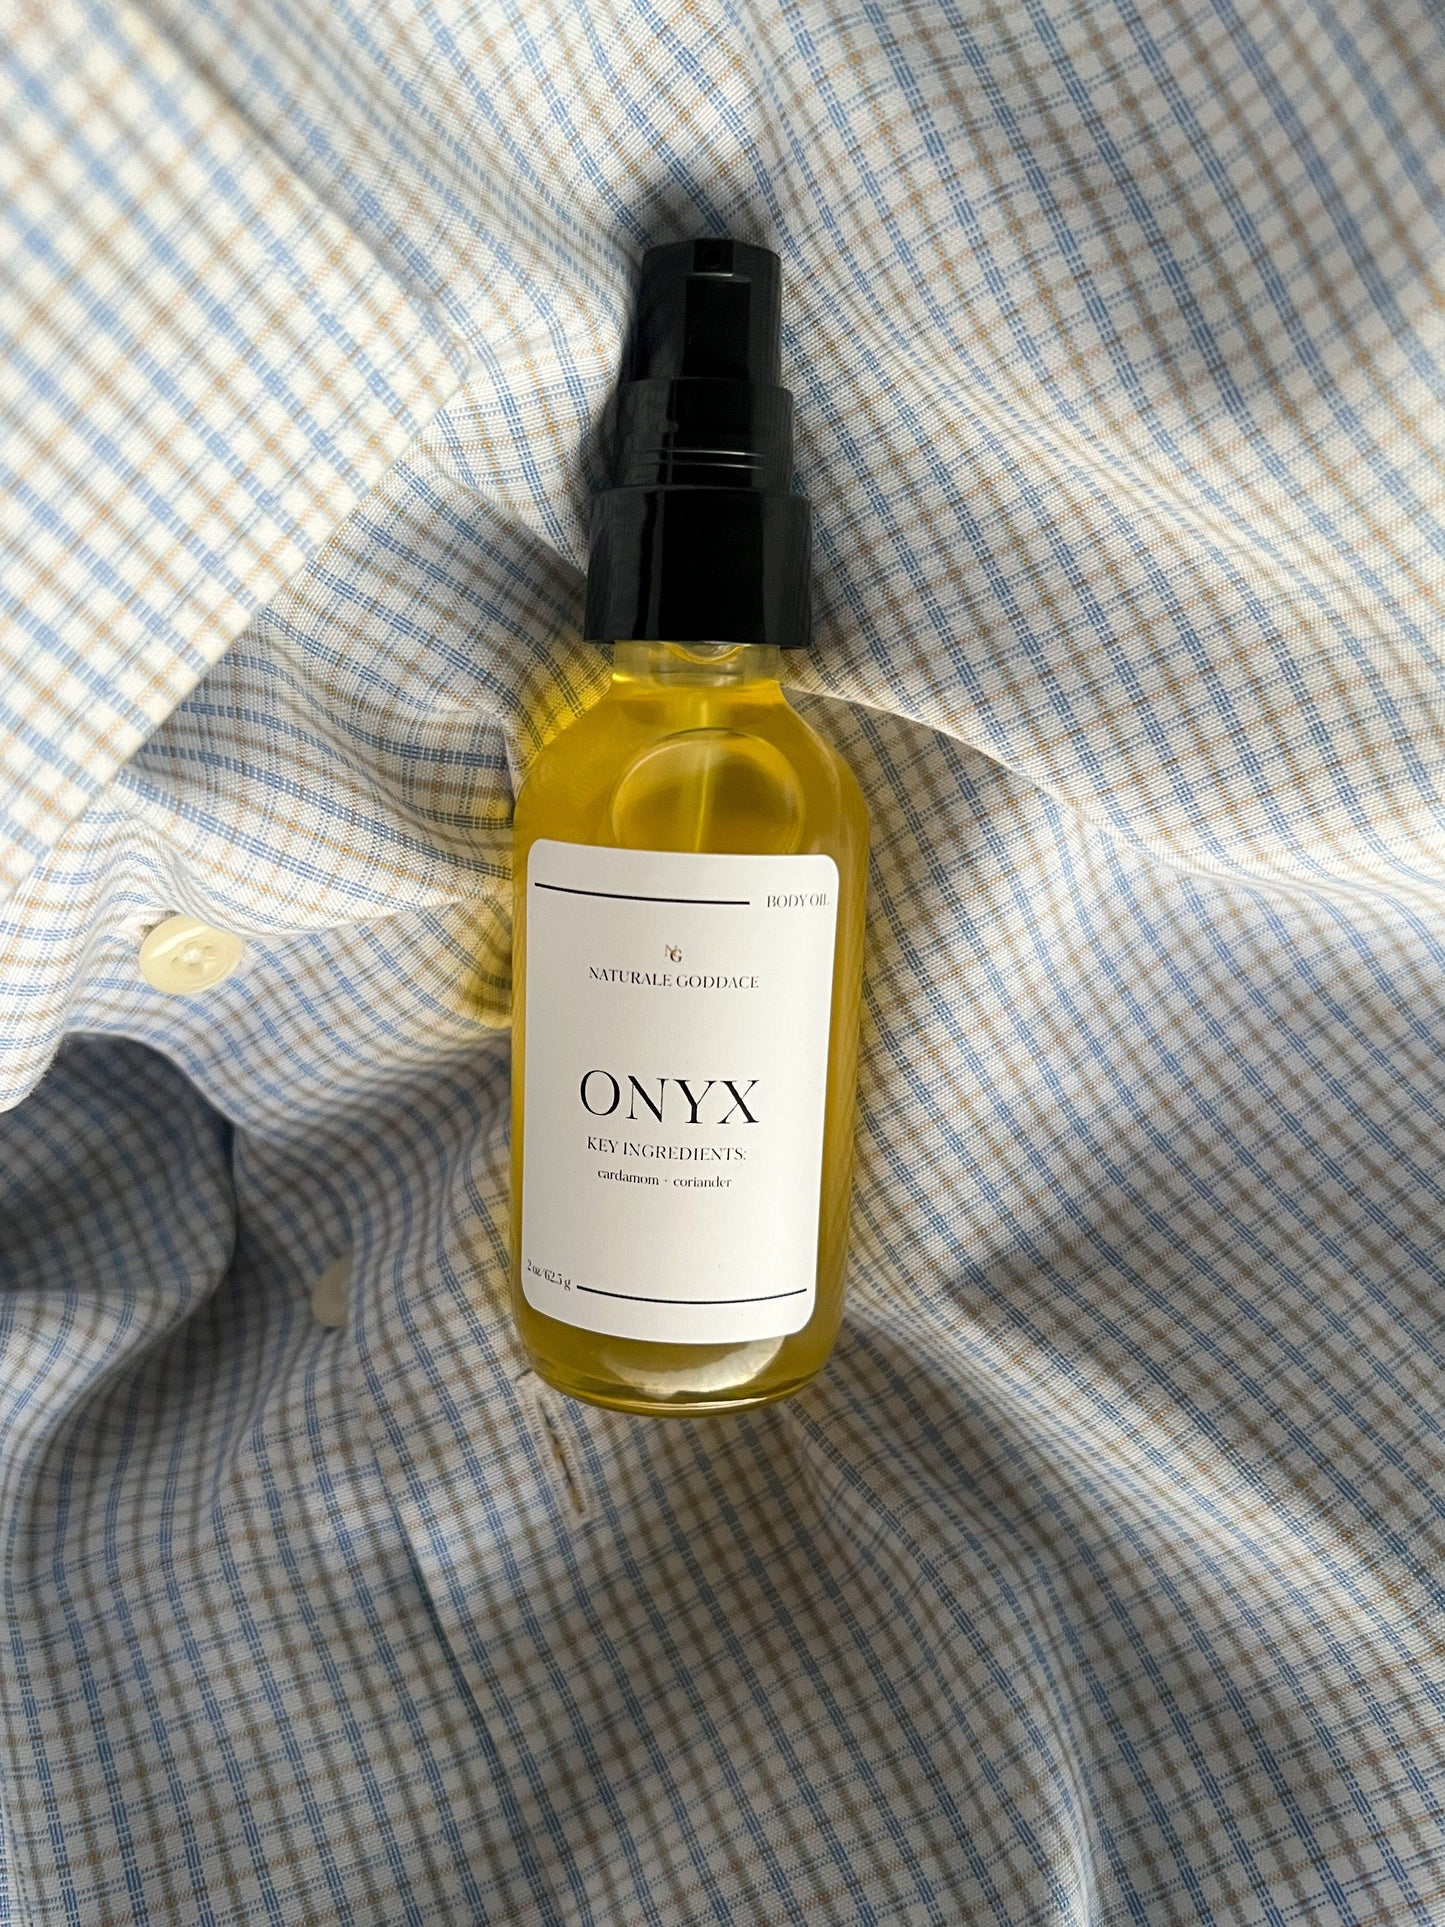 Onyx Body Oil - Naturale Goddace-